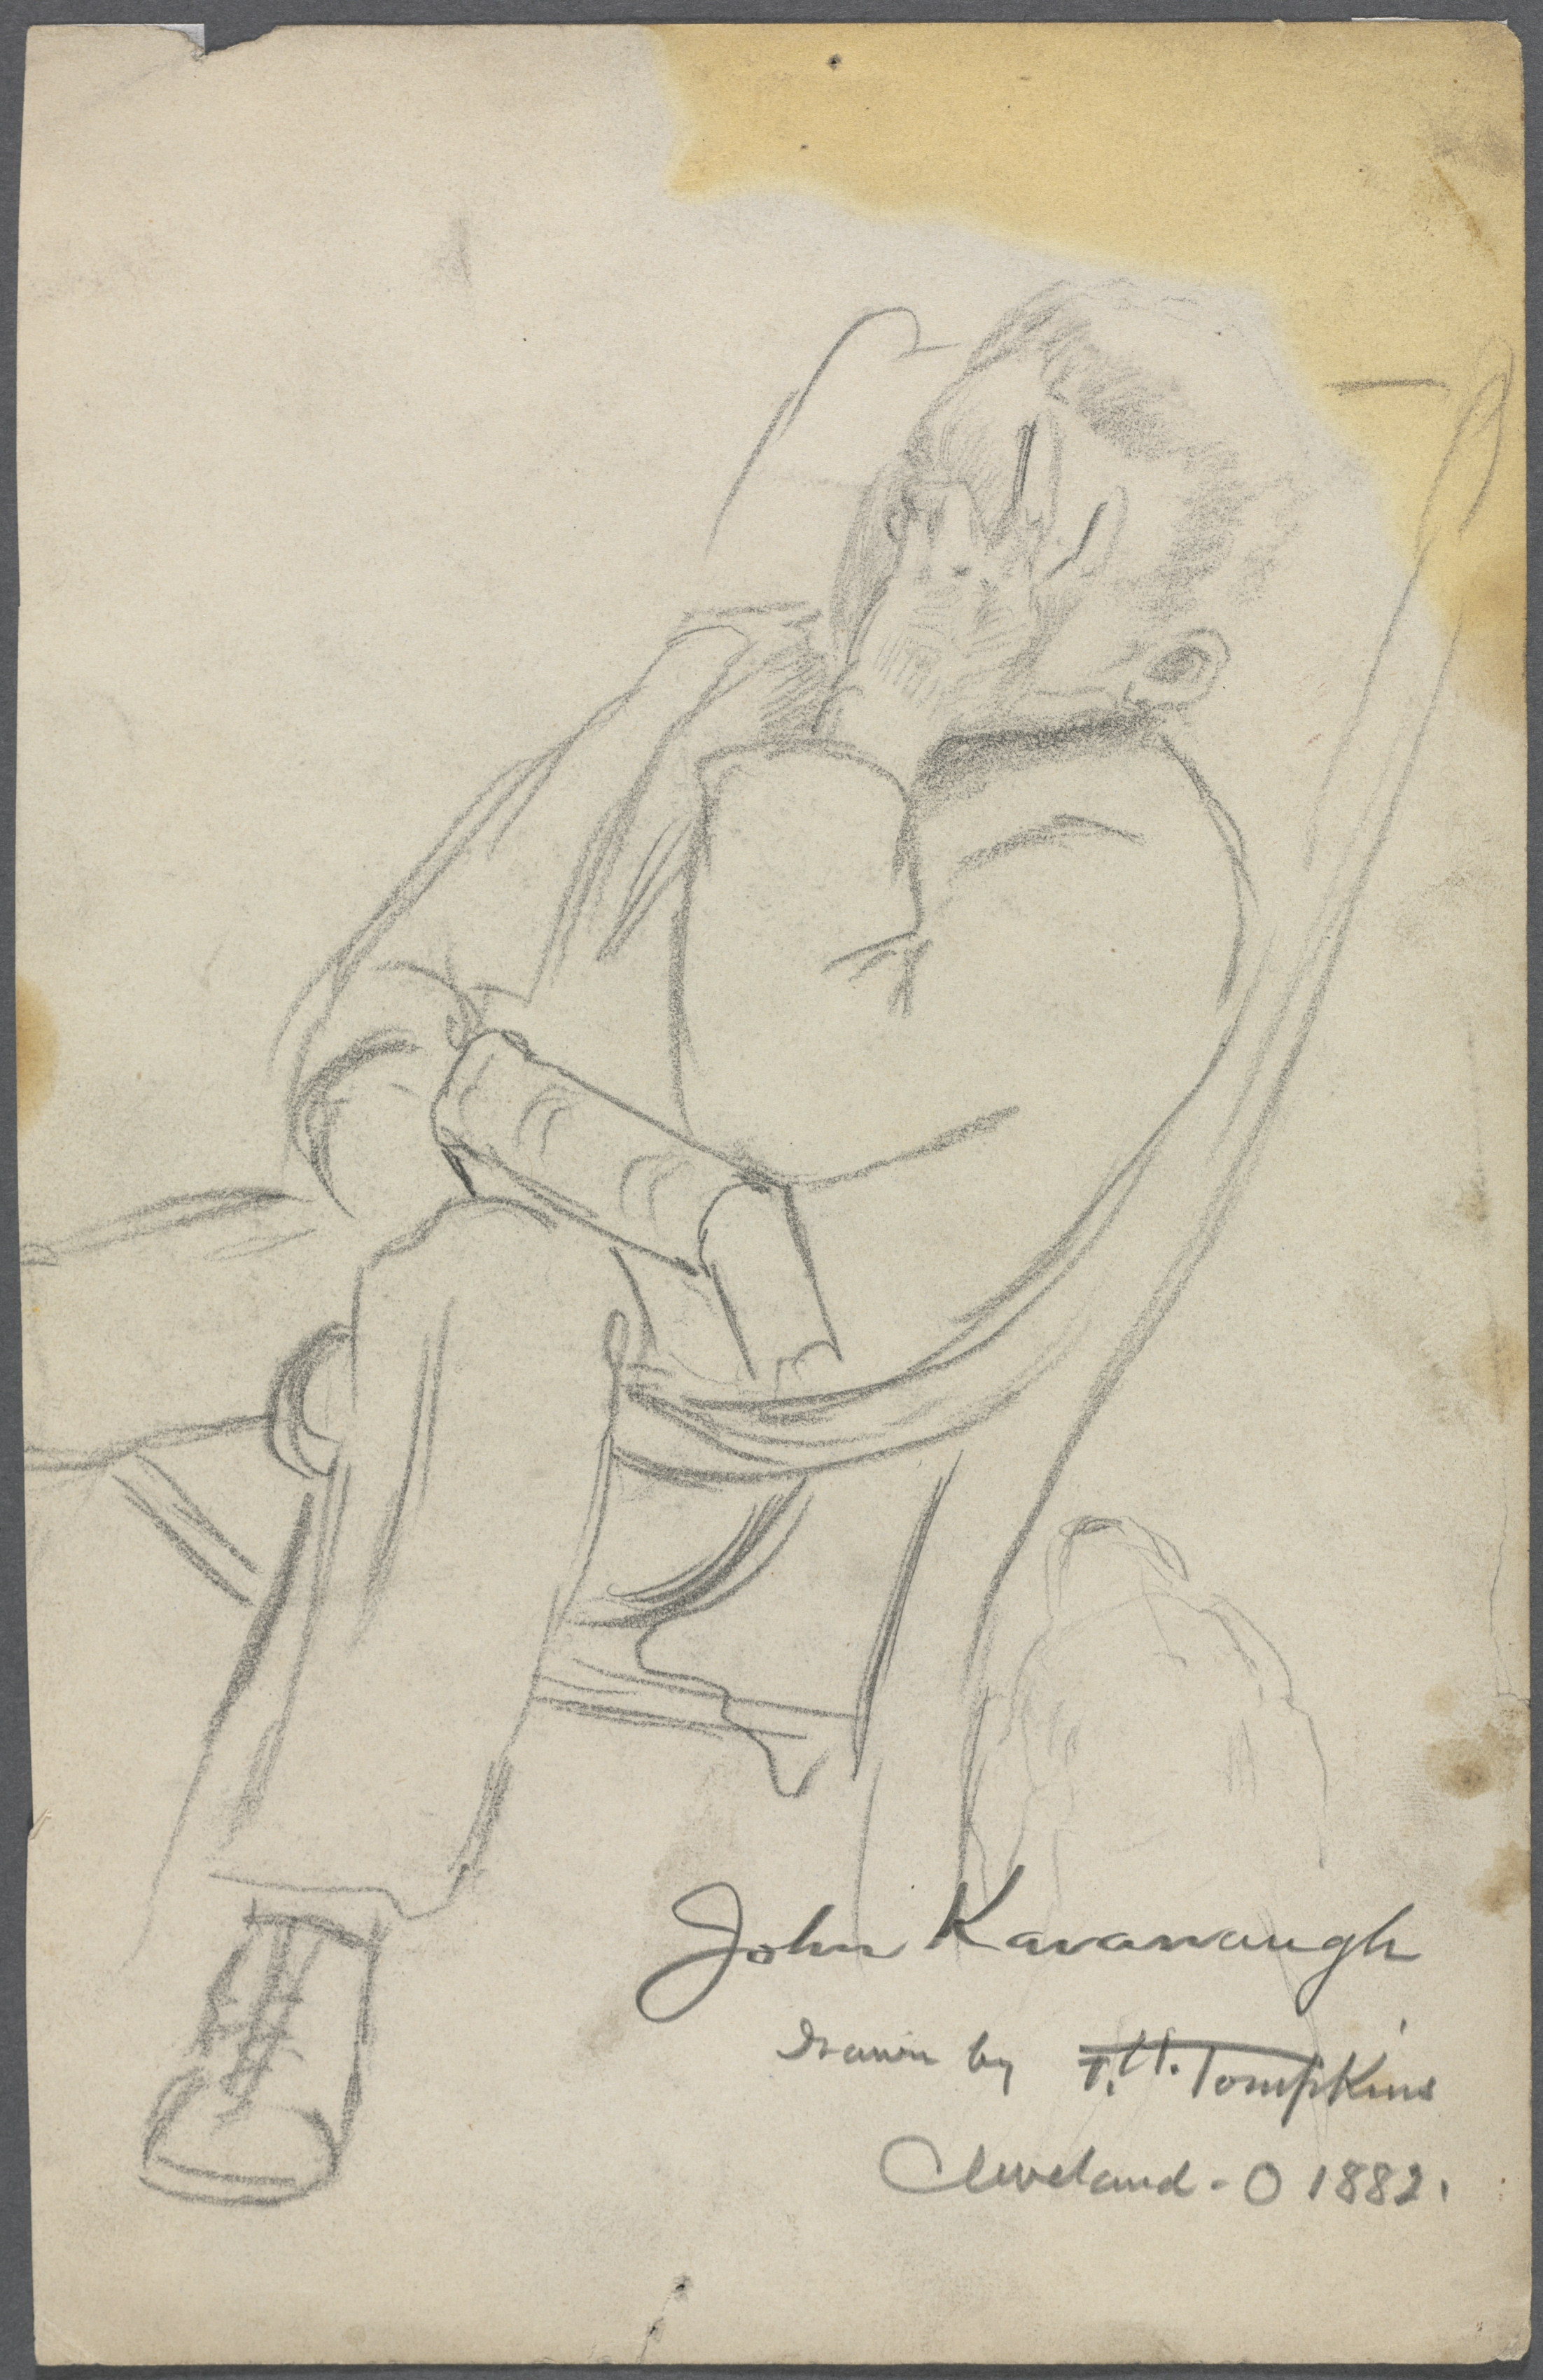 Sketch of John Kavanaugh